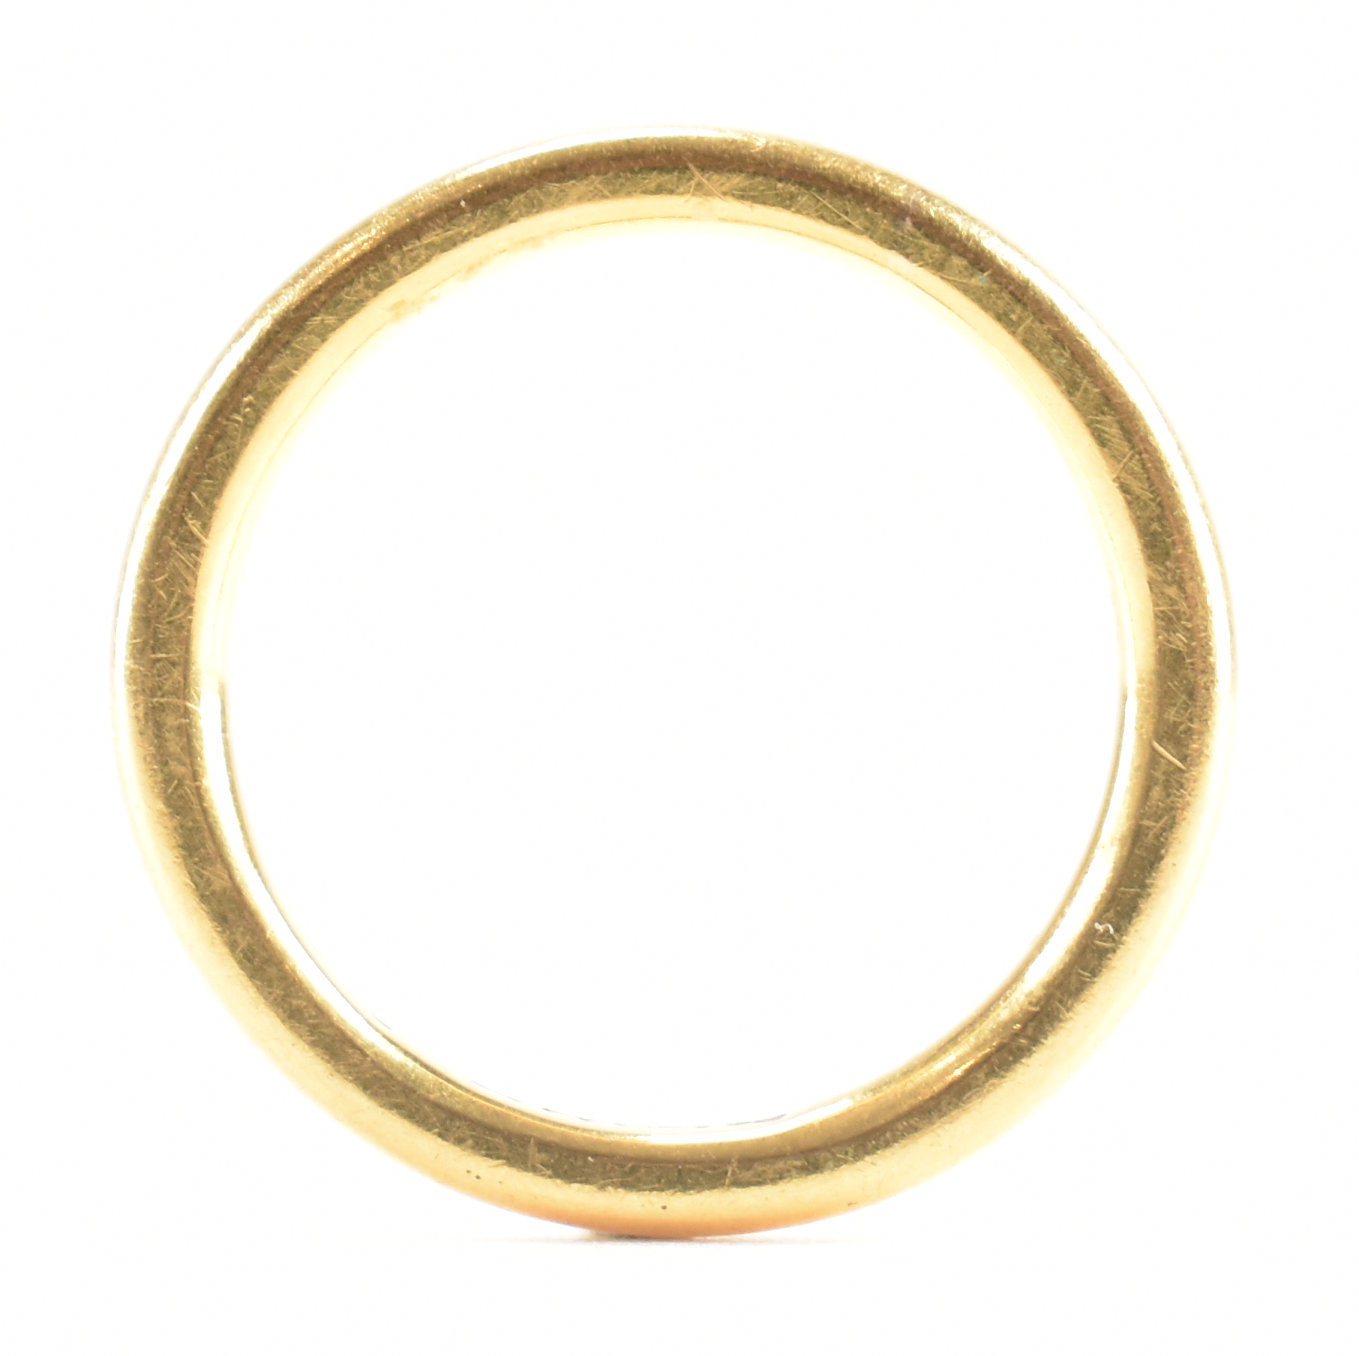 HALLMARKED 22CT GOLD WEDDING BAND RING - Image 5 of 7